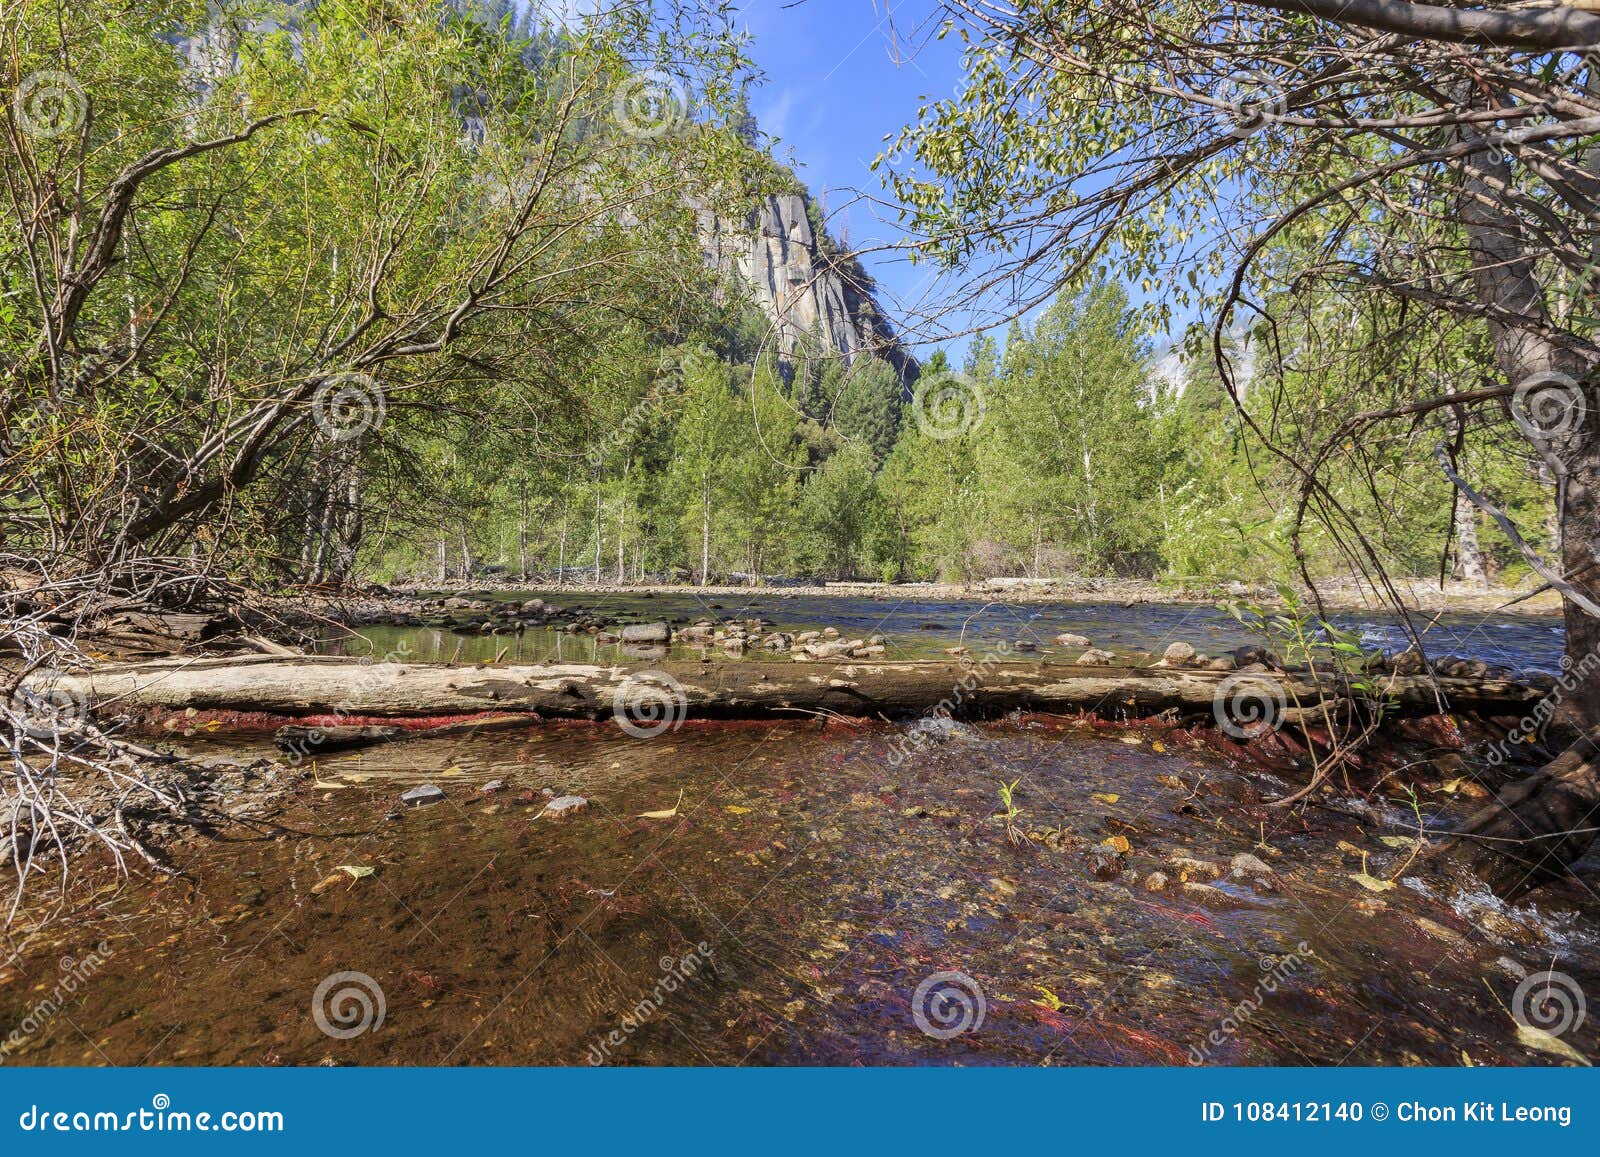 The Beautiful Merced River in Yosemite National Park Stock Photo ...